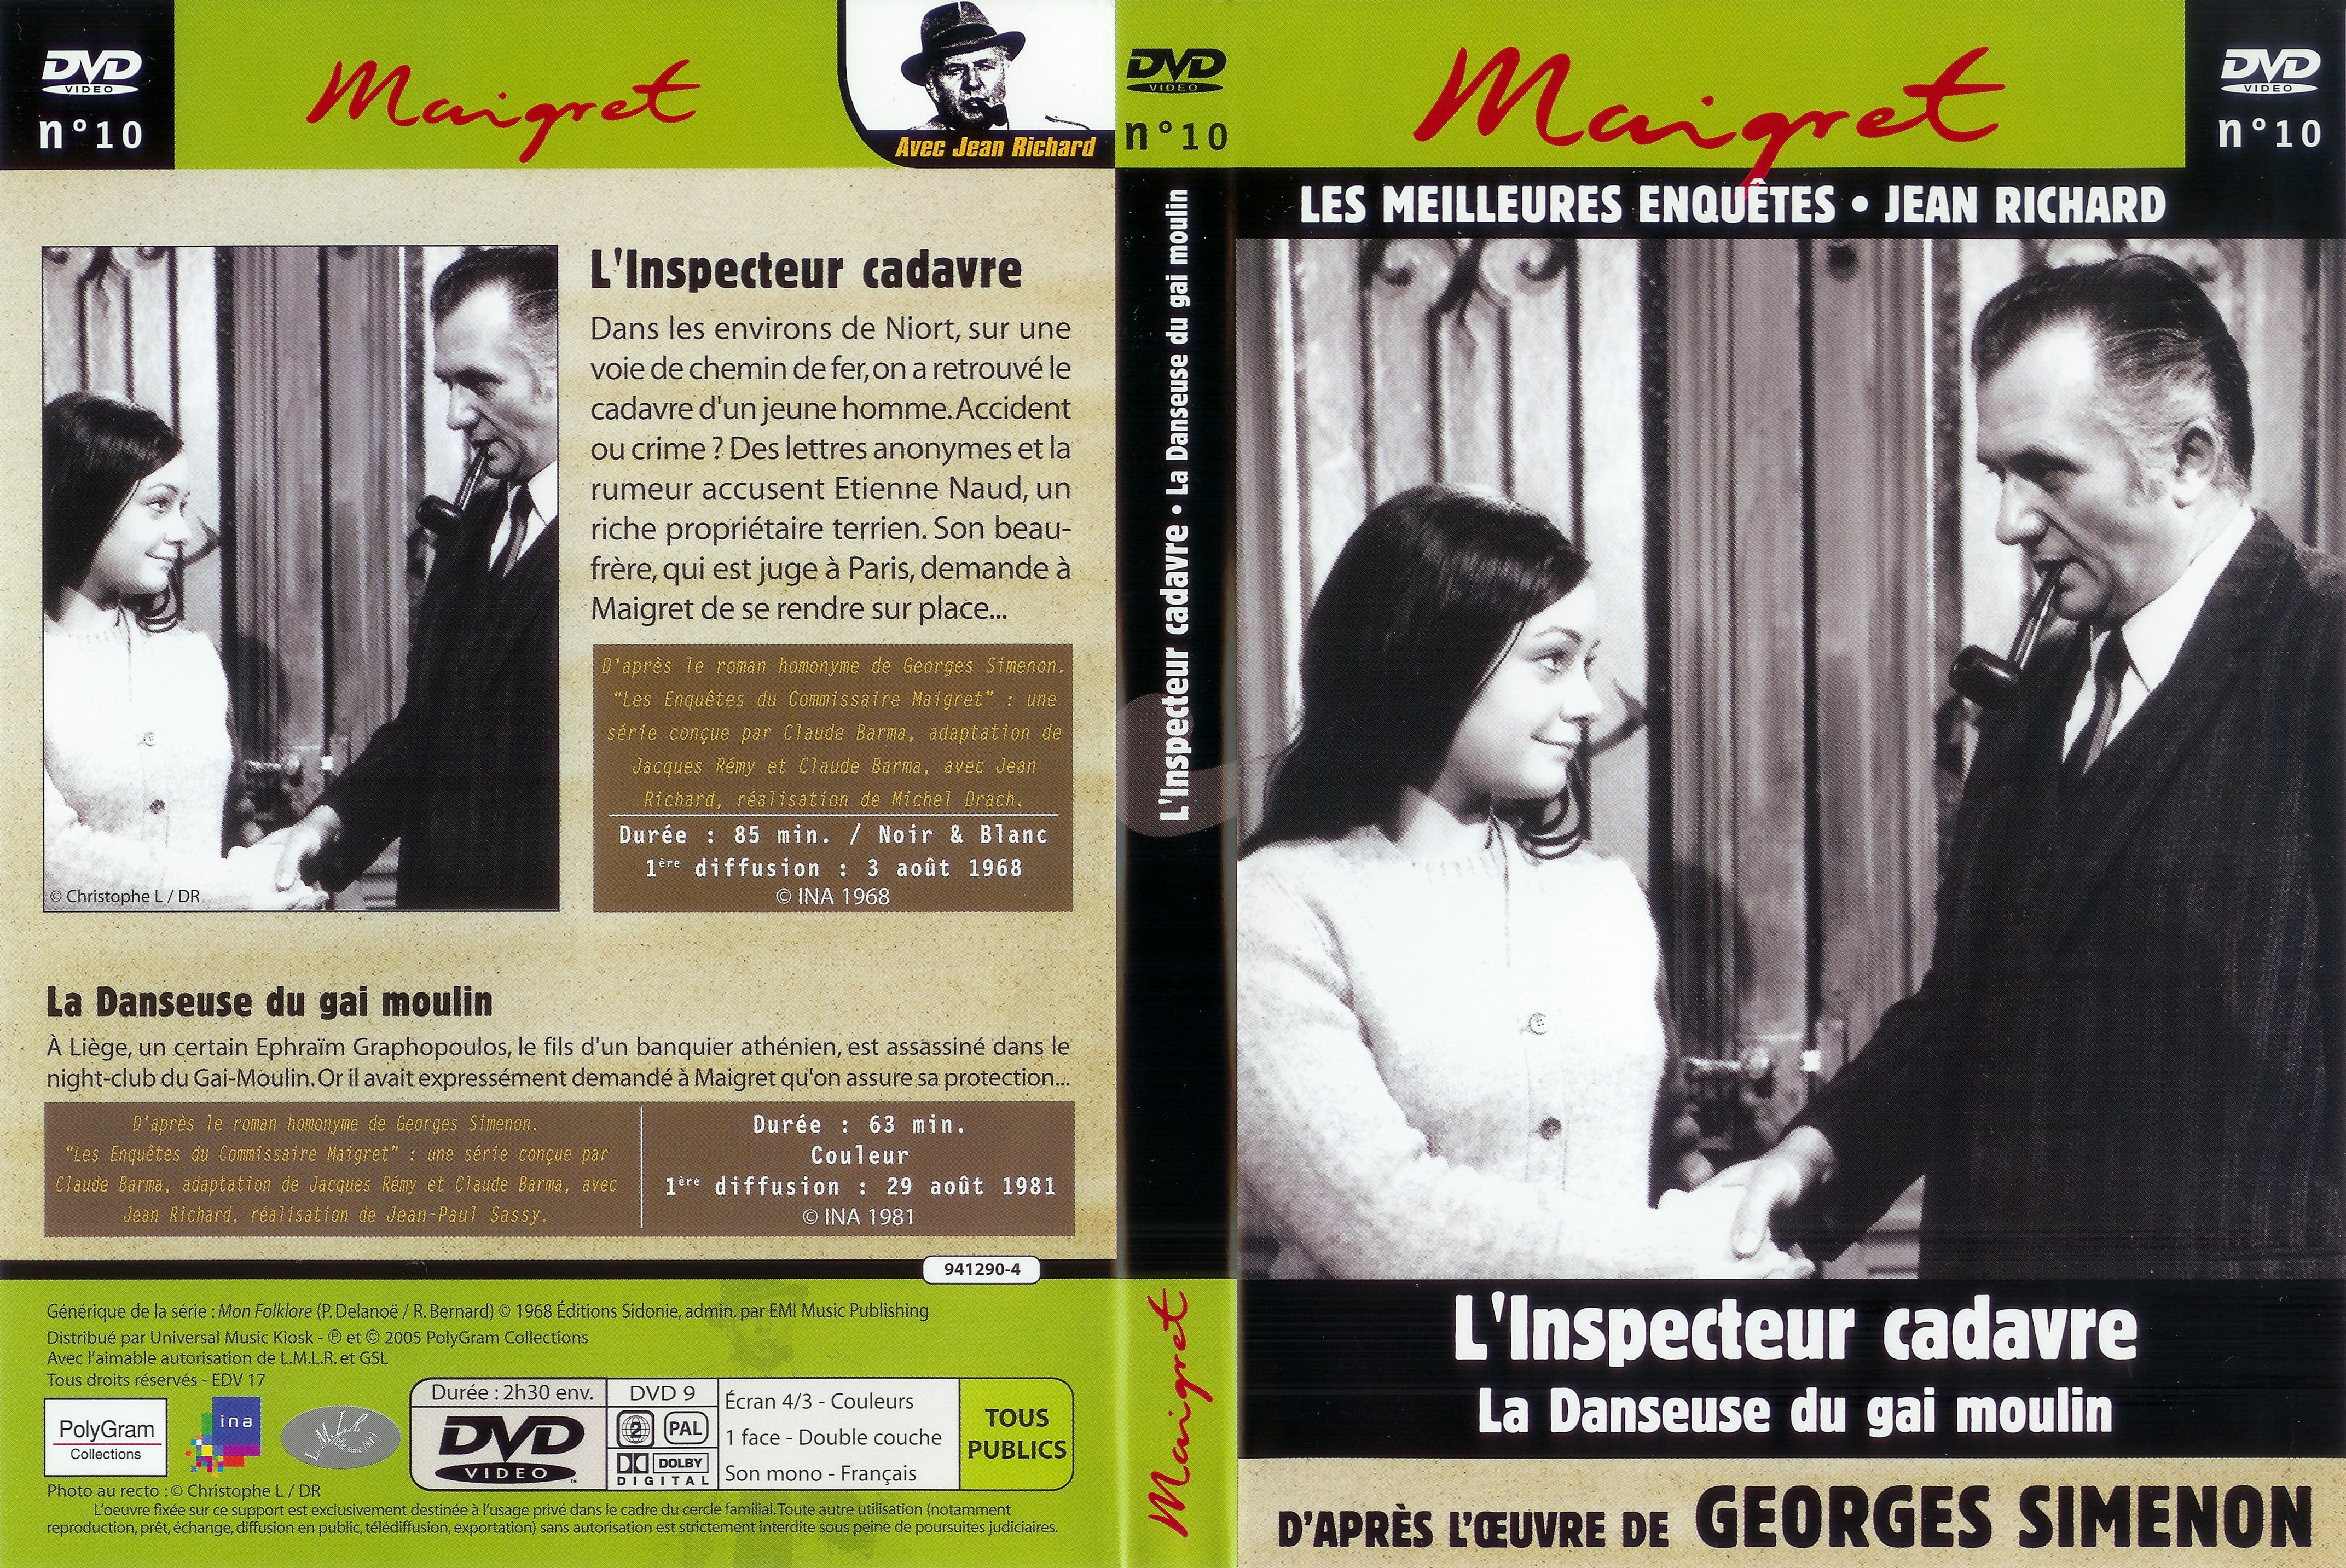 Jaquette DVD Maigret (Jean Richard) vol 10